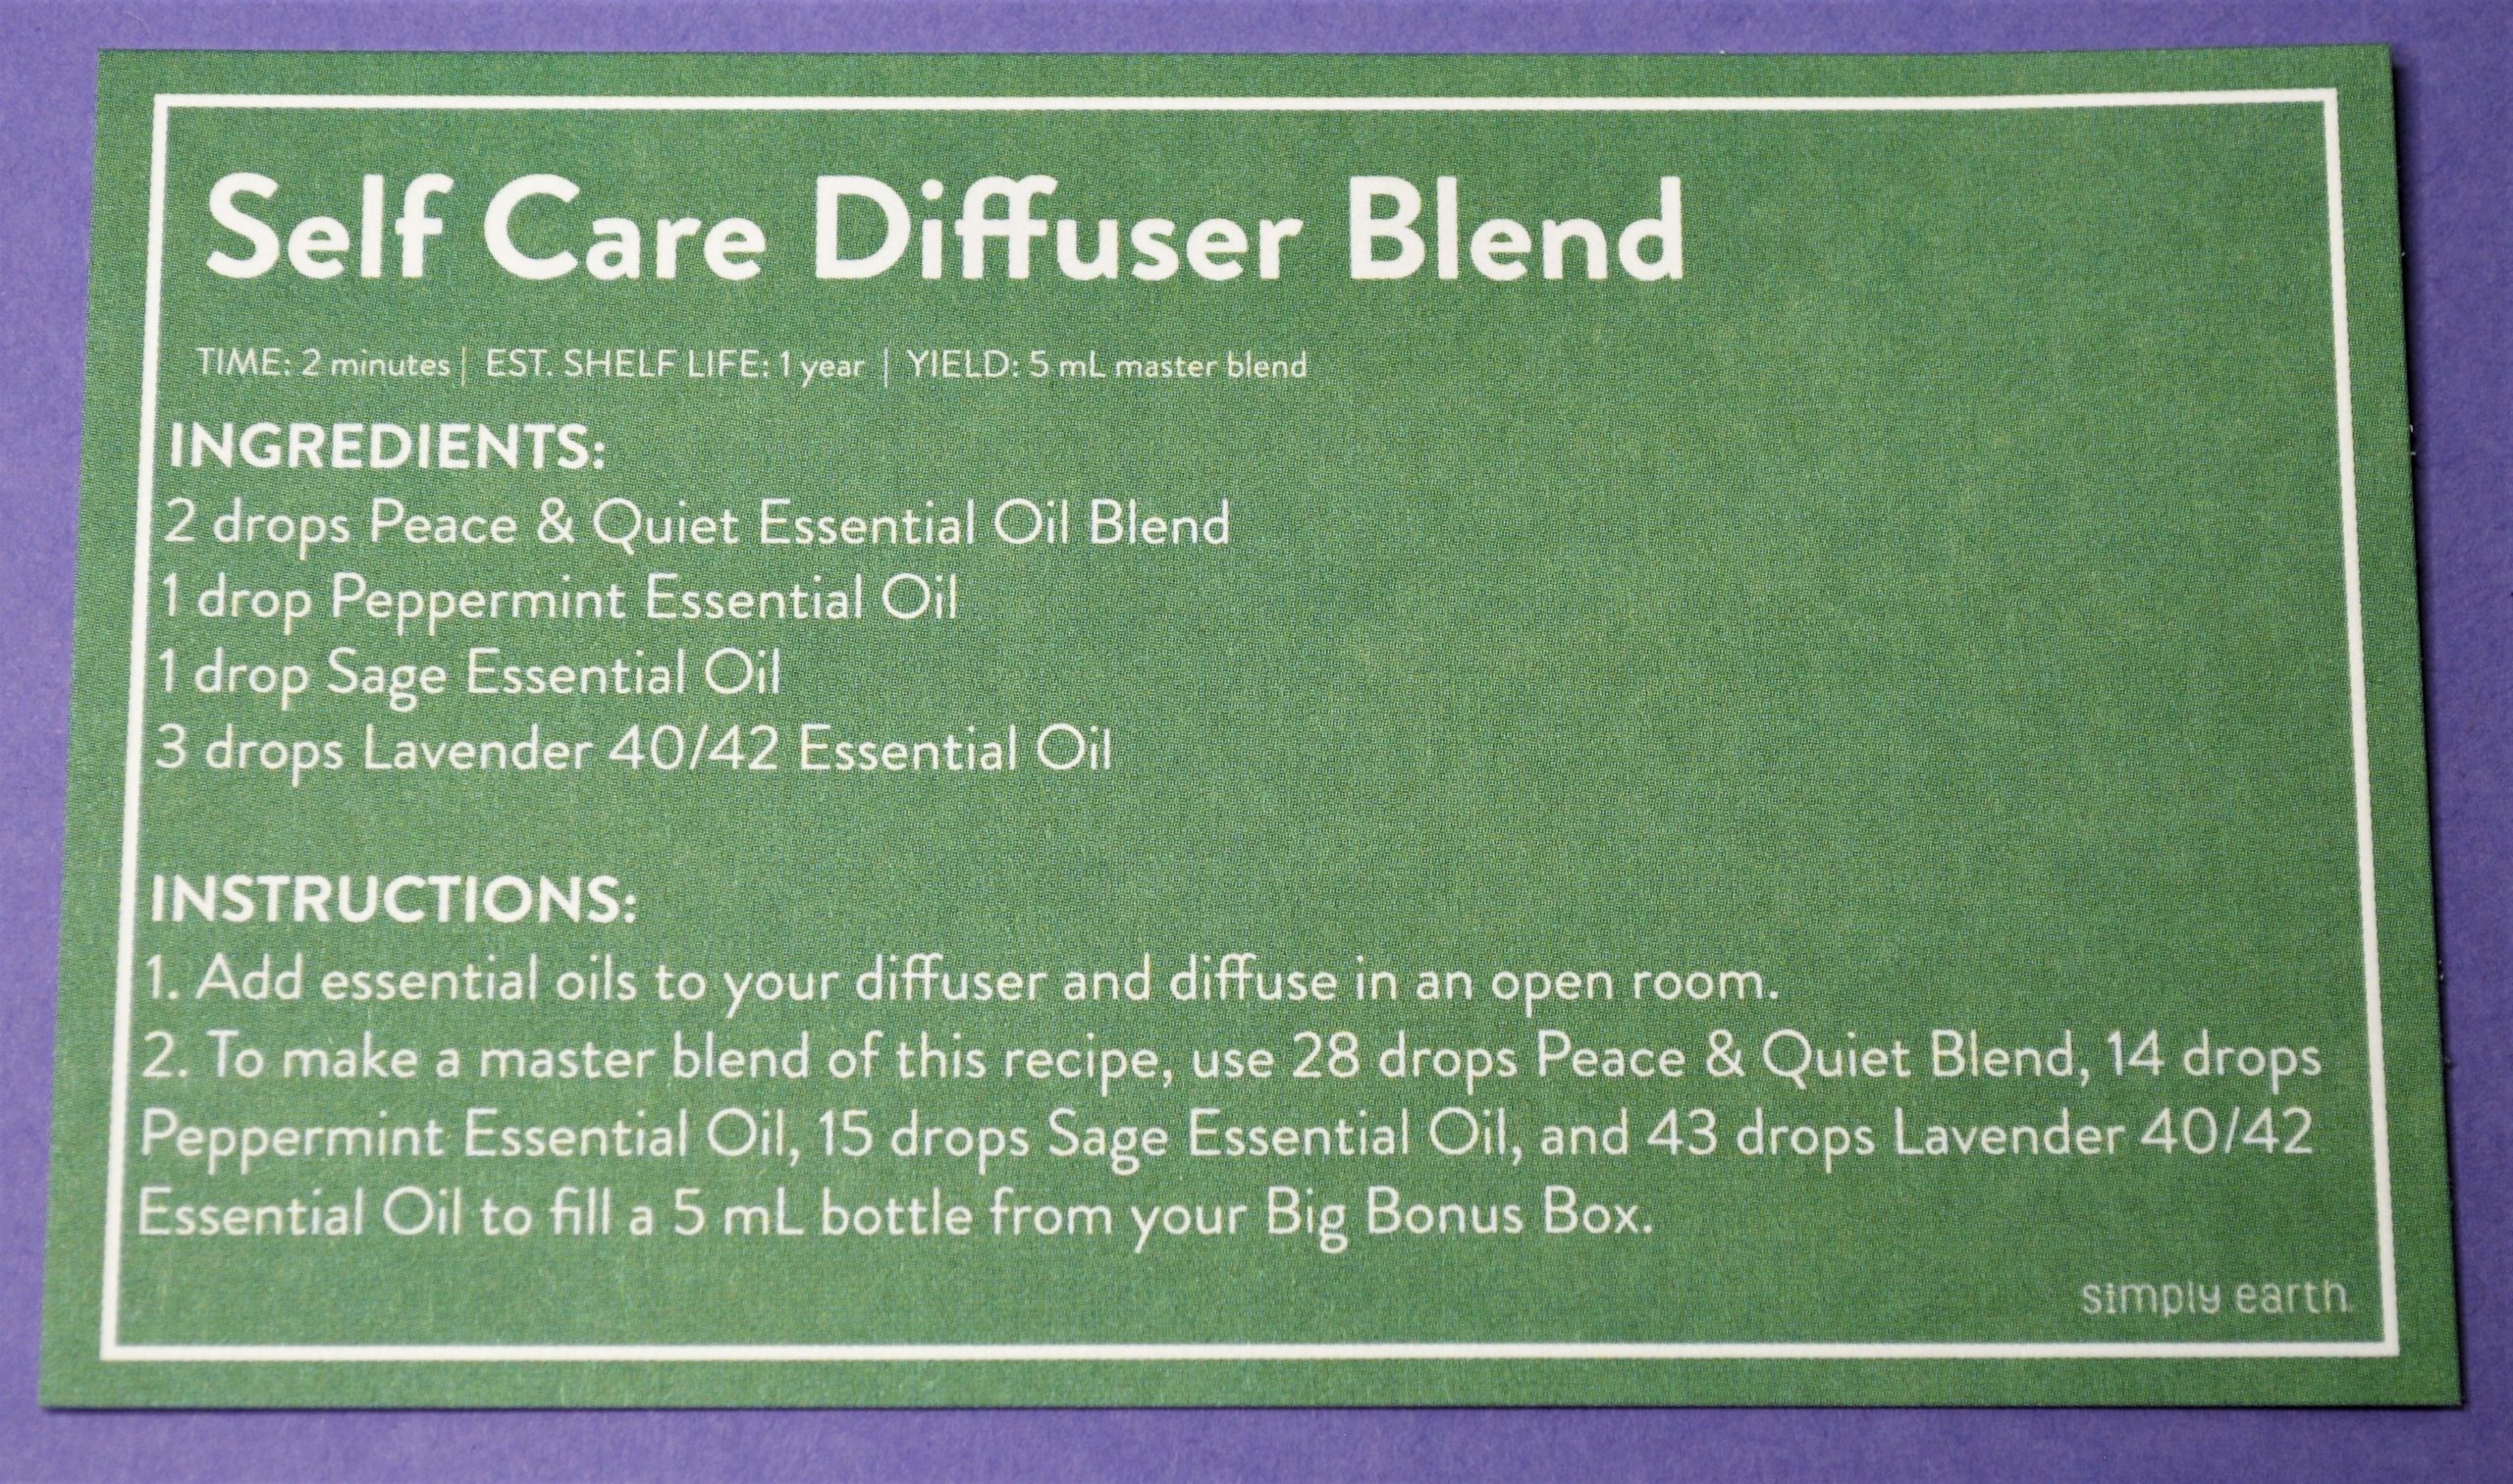 Simply Earth Self Care Master Diffuser Blend Recipe Card